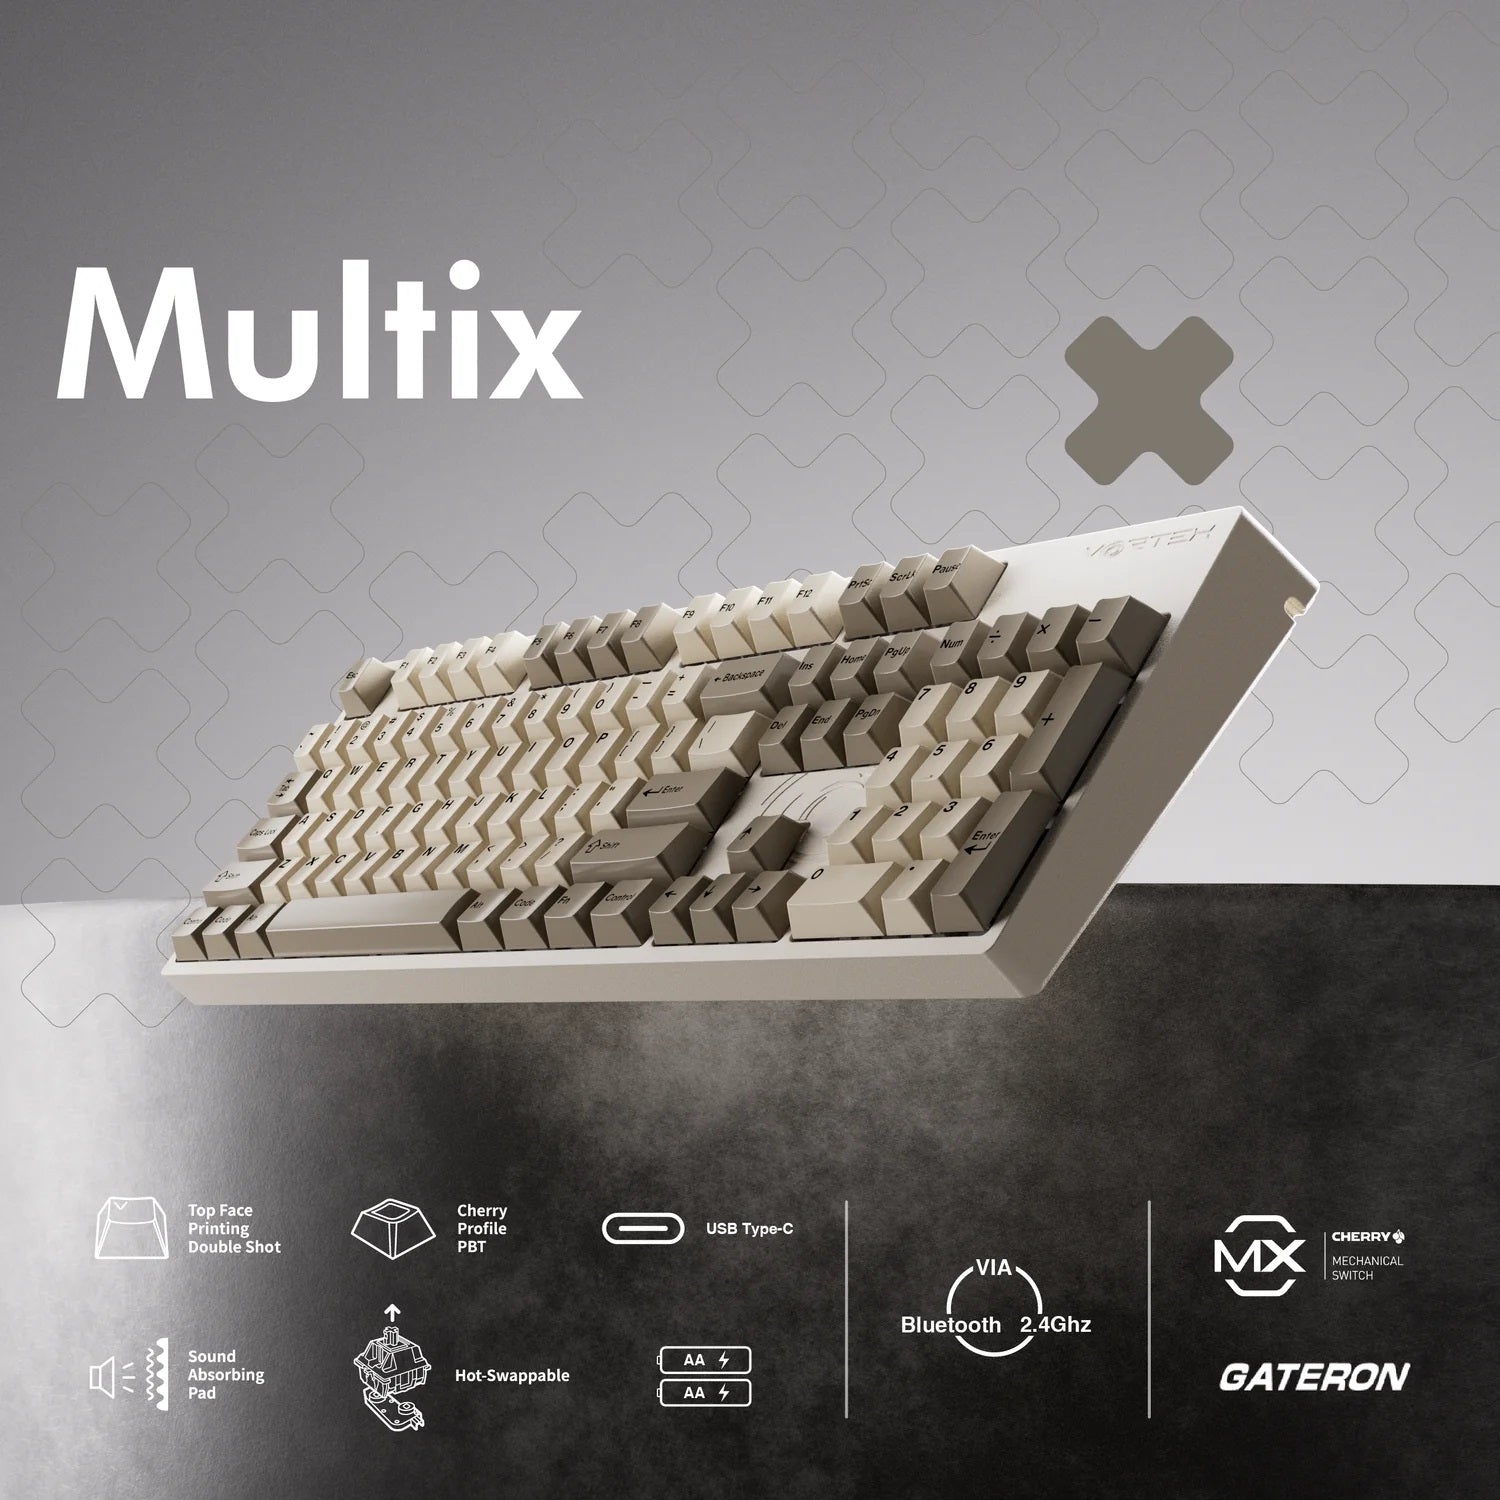 Vortex Multix Autumn VIA Mechanical Keyboard MKY8IUUDNJ |63133|